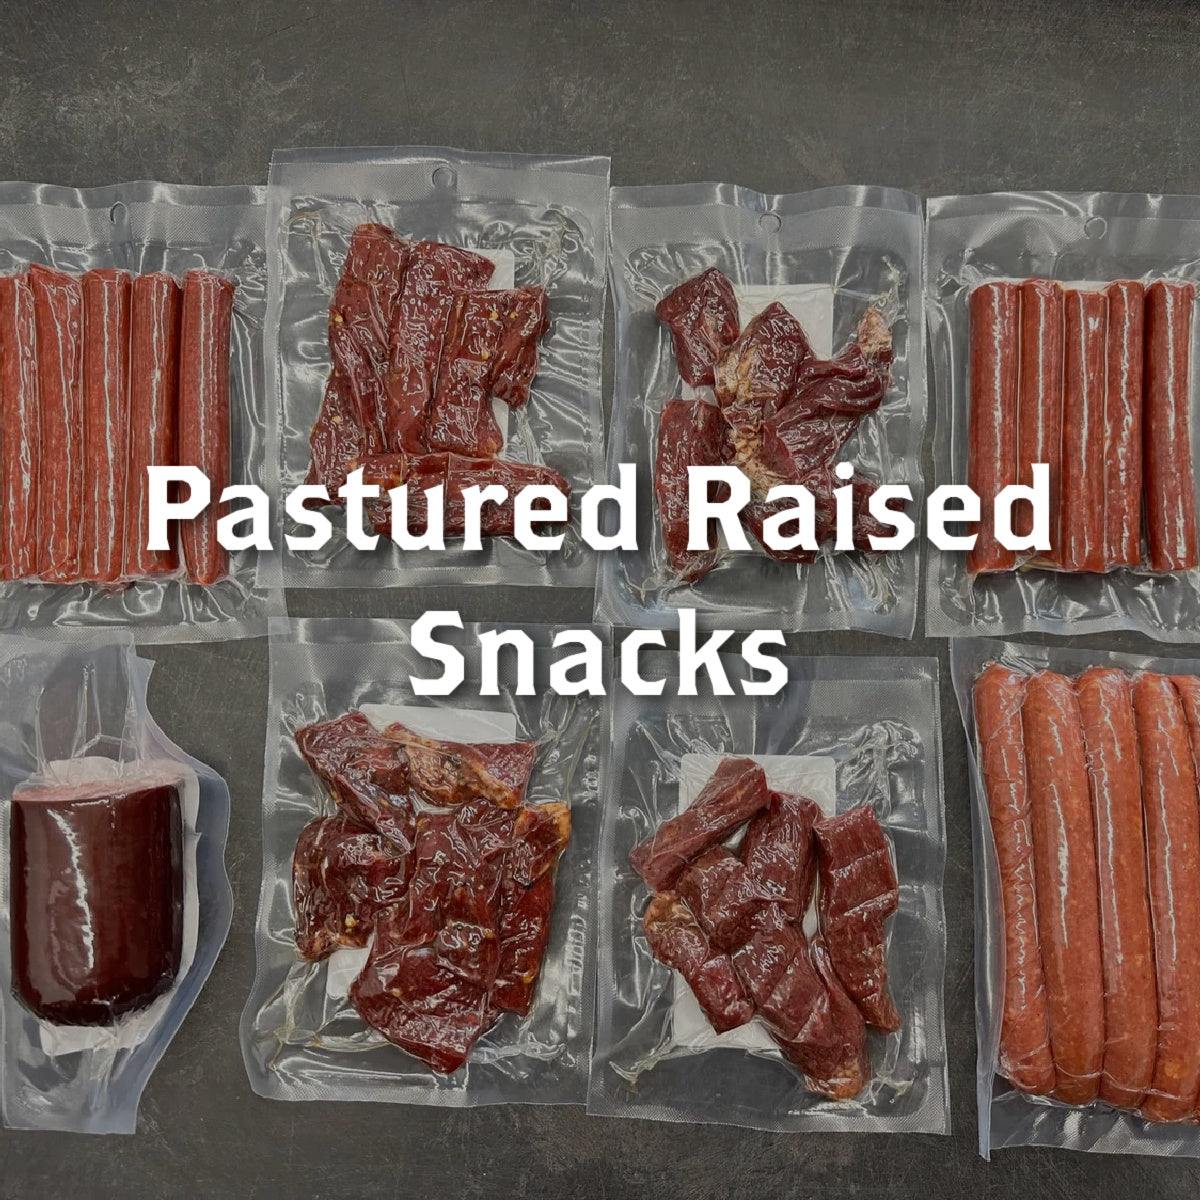 Image of pasture raised snacks like beef jerky and Beef sticks